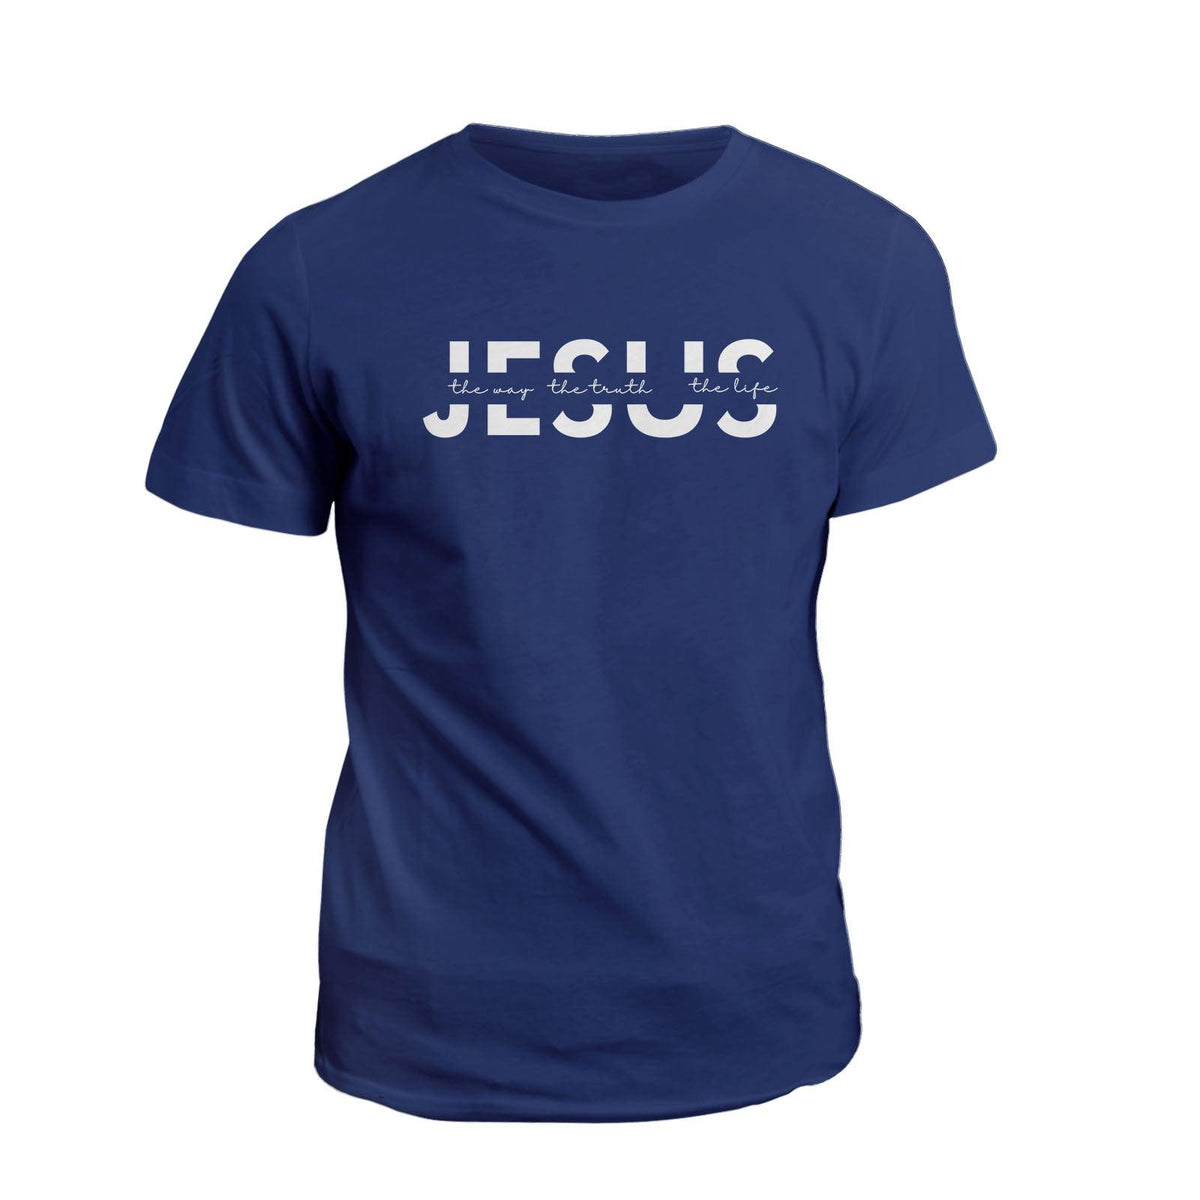 JESUS - Our True God